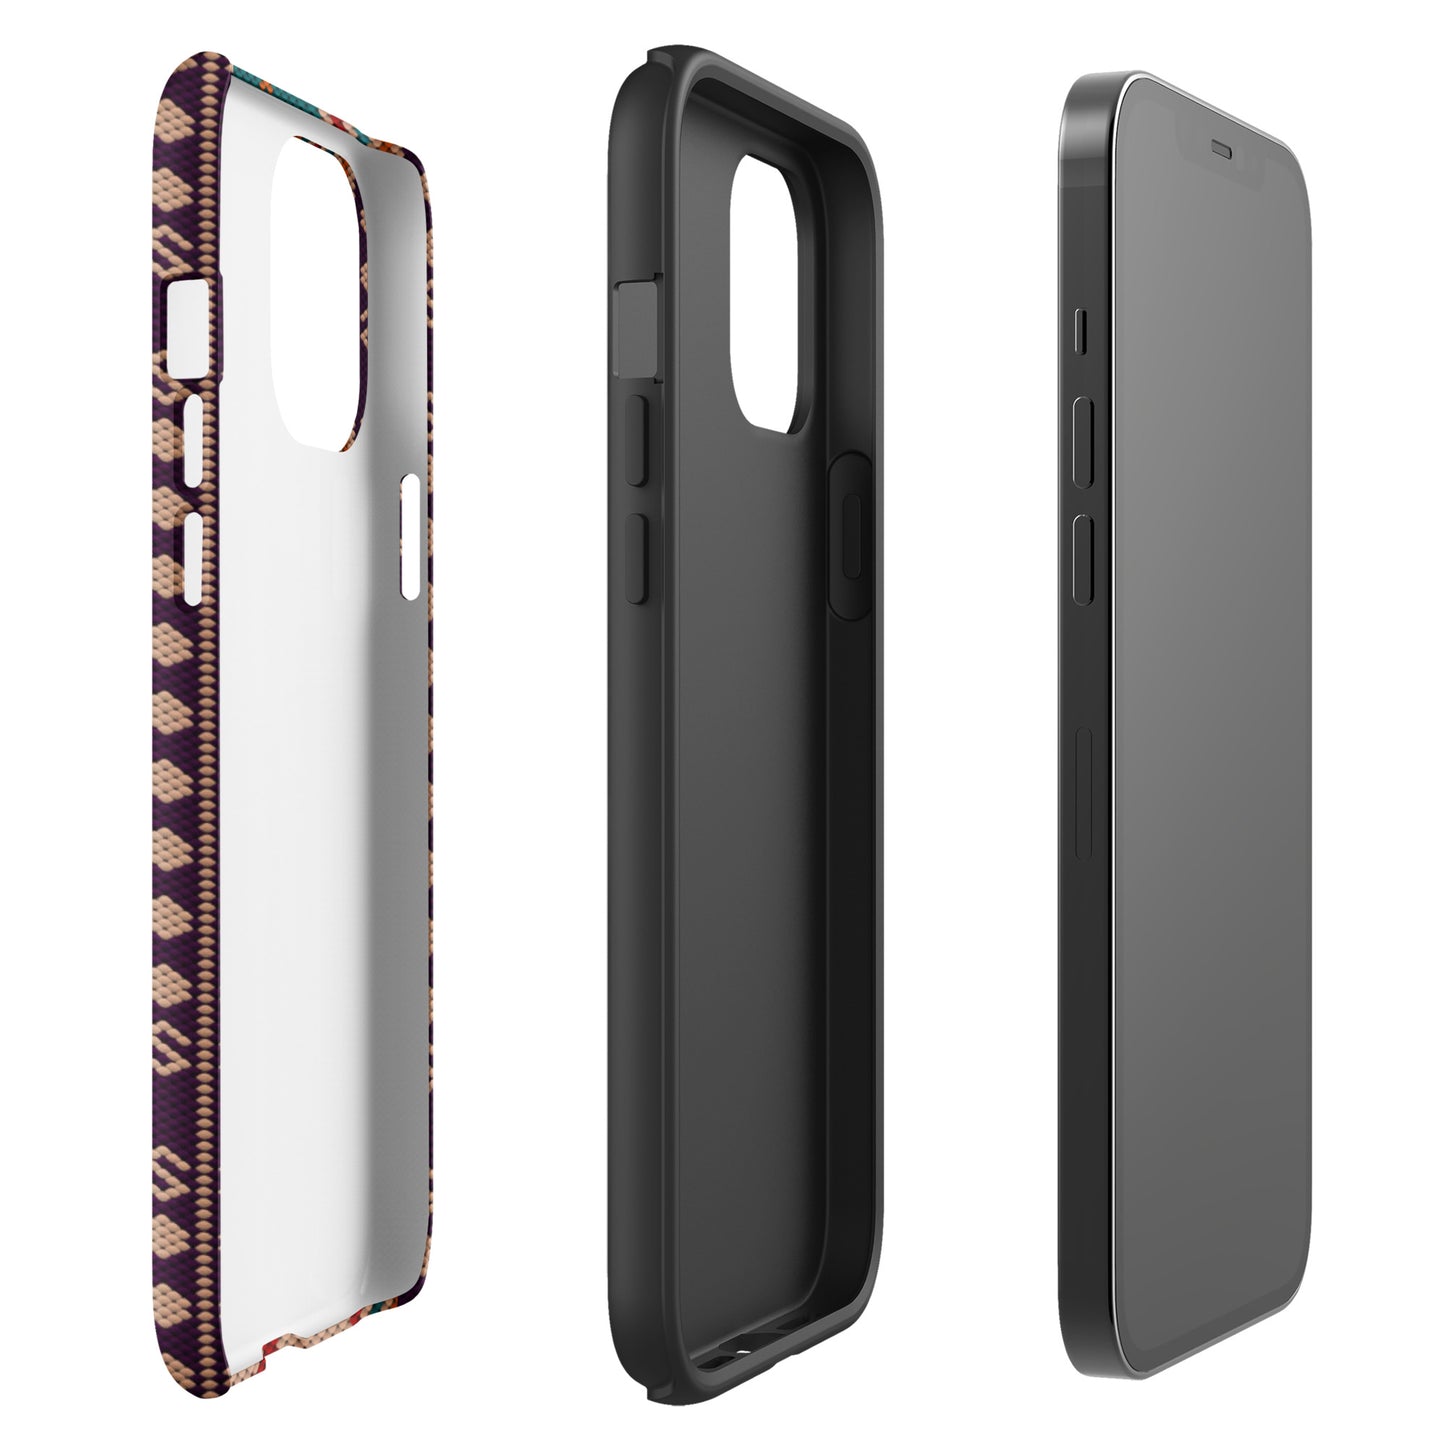 Navajo Tough iPhone case